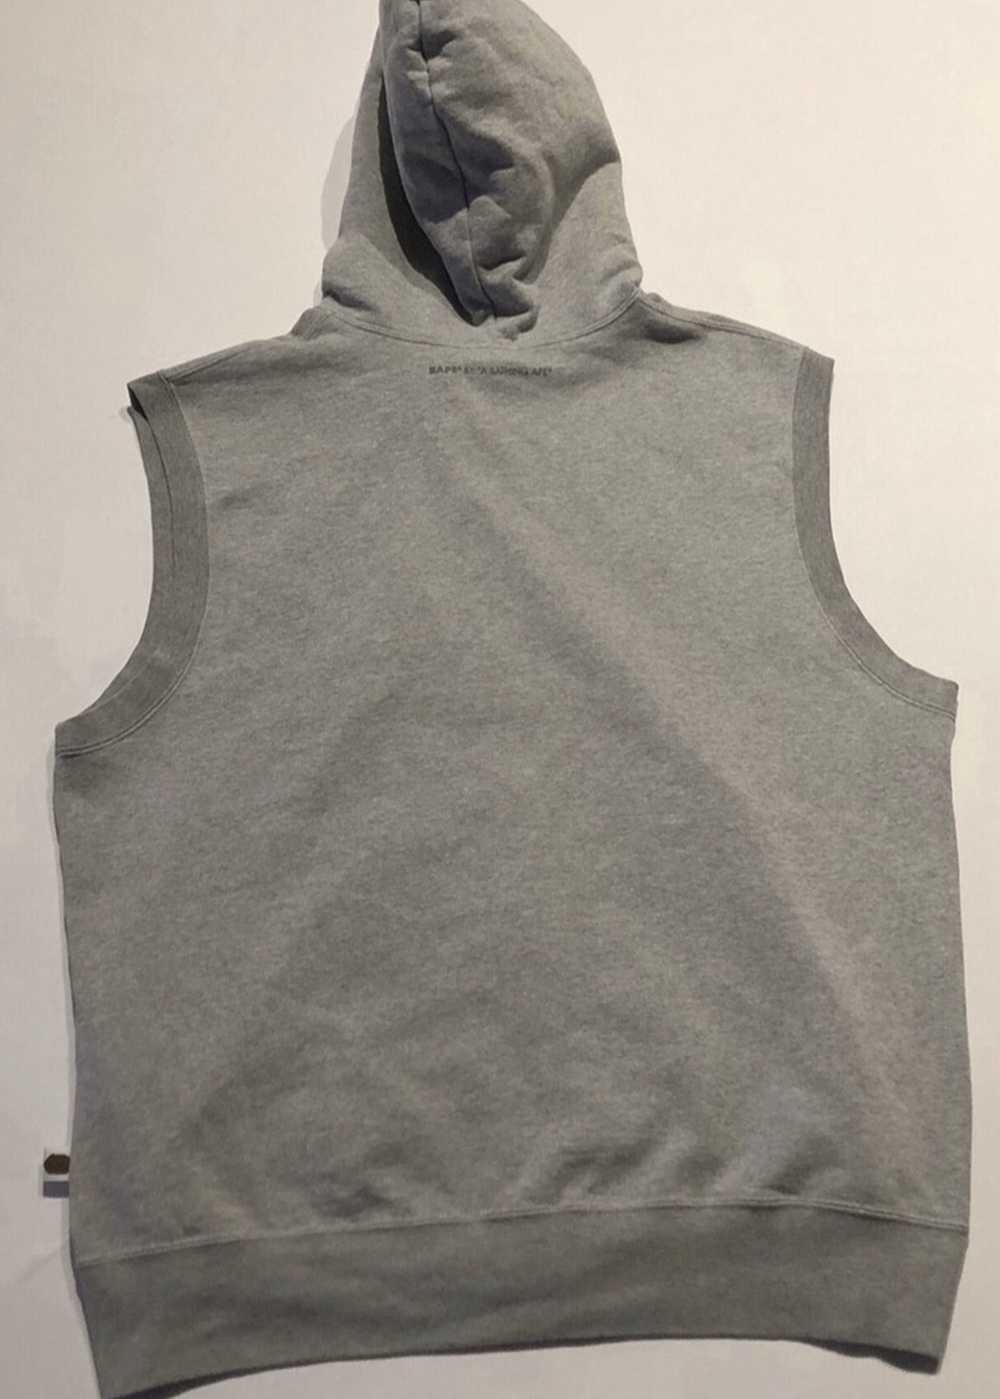 Bape Bape Swarovski hoodie vest sweatshirt - image 2